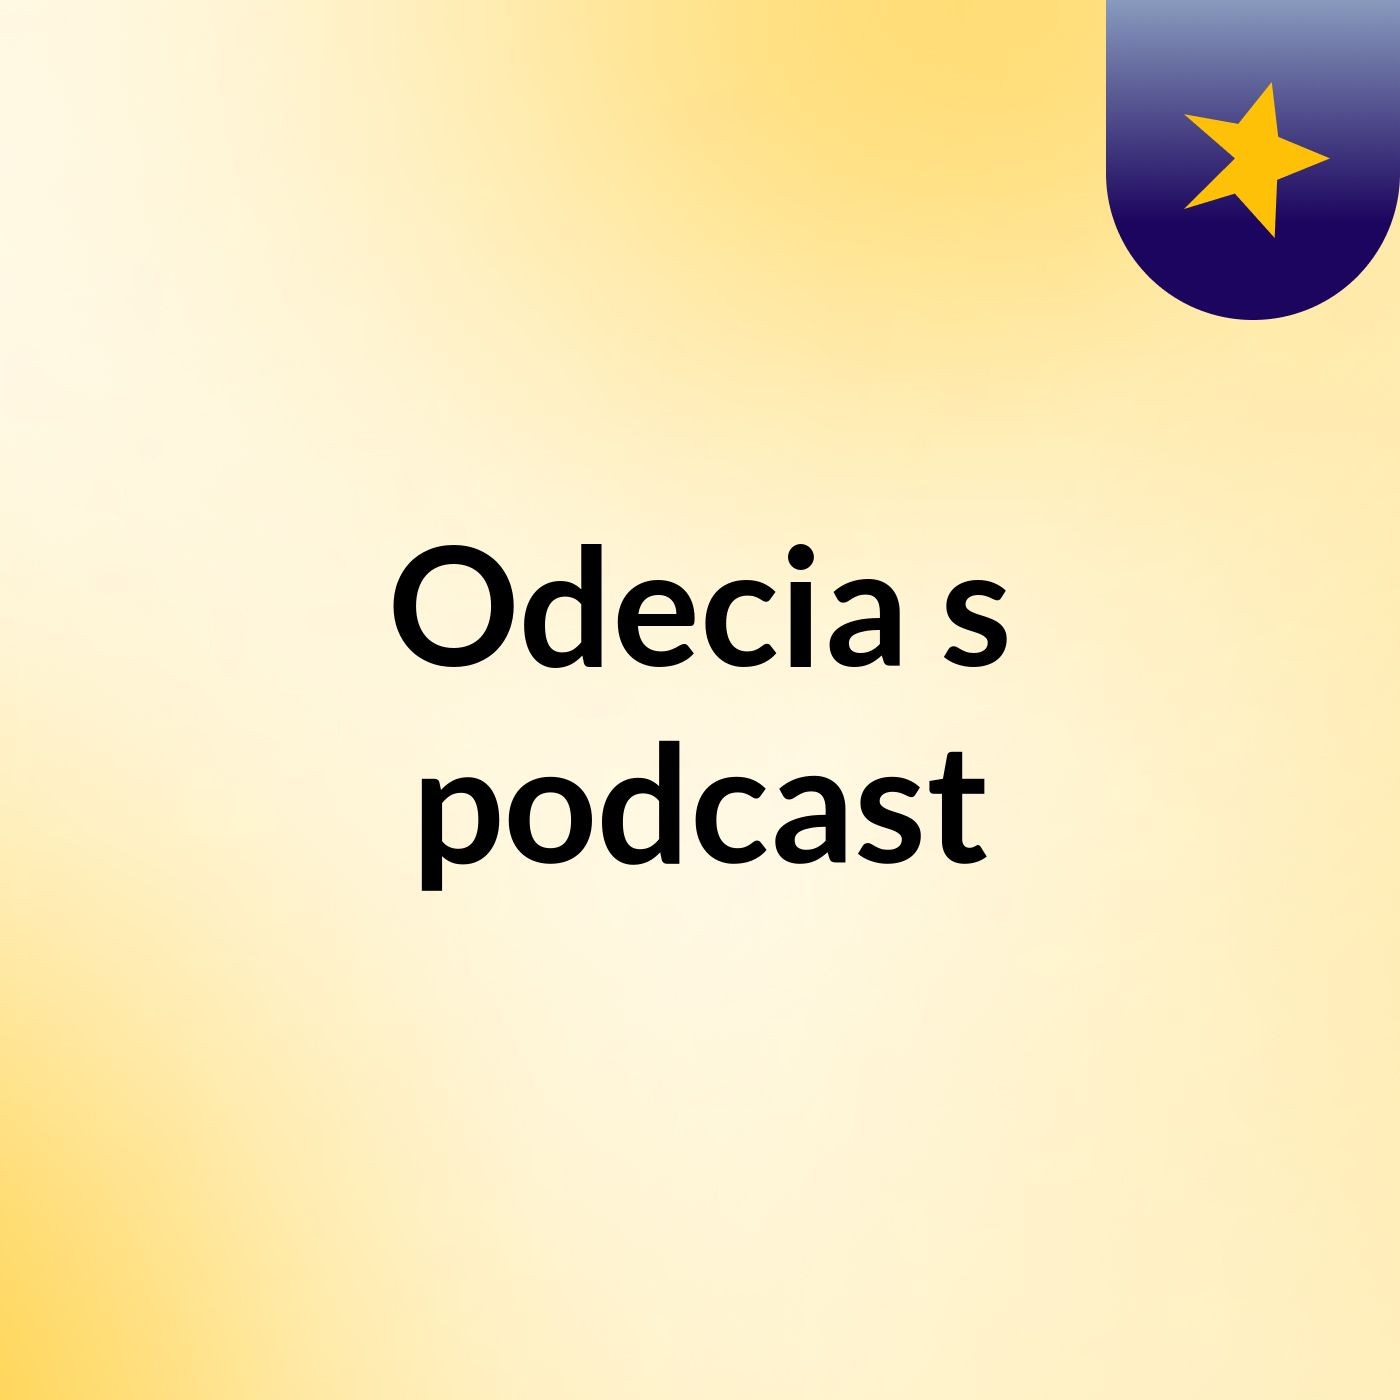 Episode 2 - Odecia's podcast